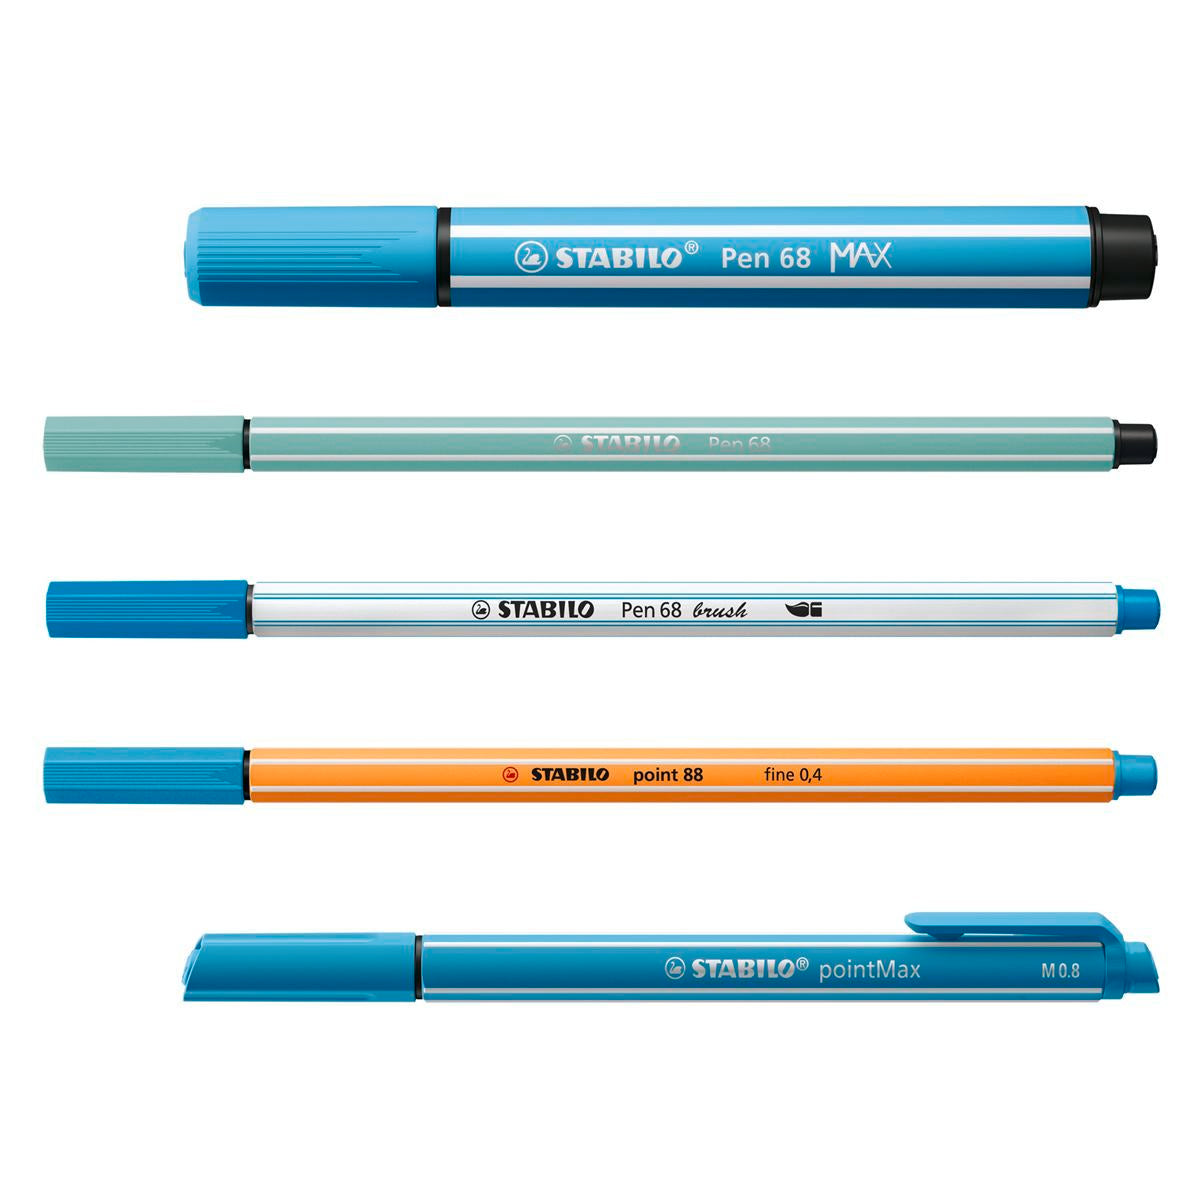 STABILO ARTY Fibre-tip Pen Set - Pen 68 MAX, Pen 68, Pen 68 Brush